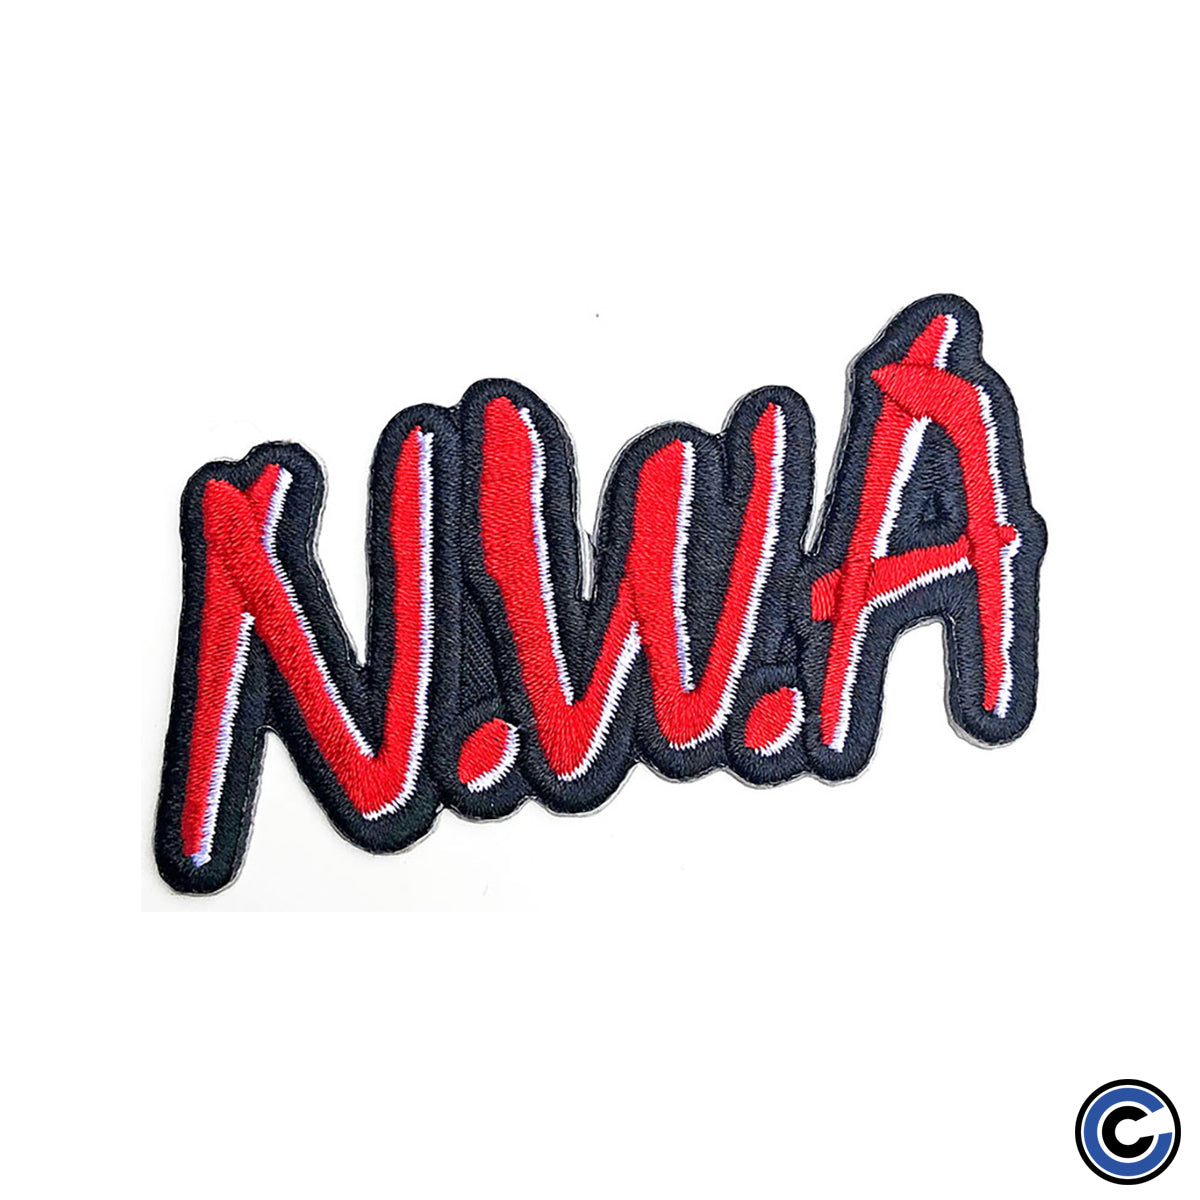 N.W.A. "Logo" Patch